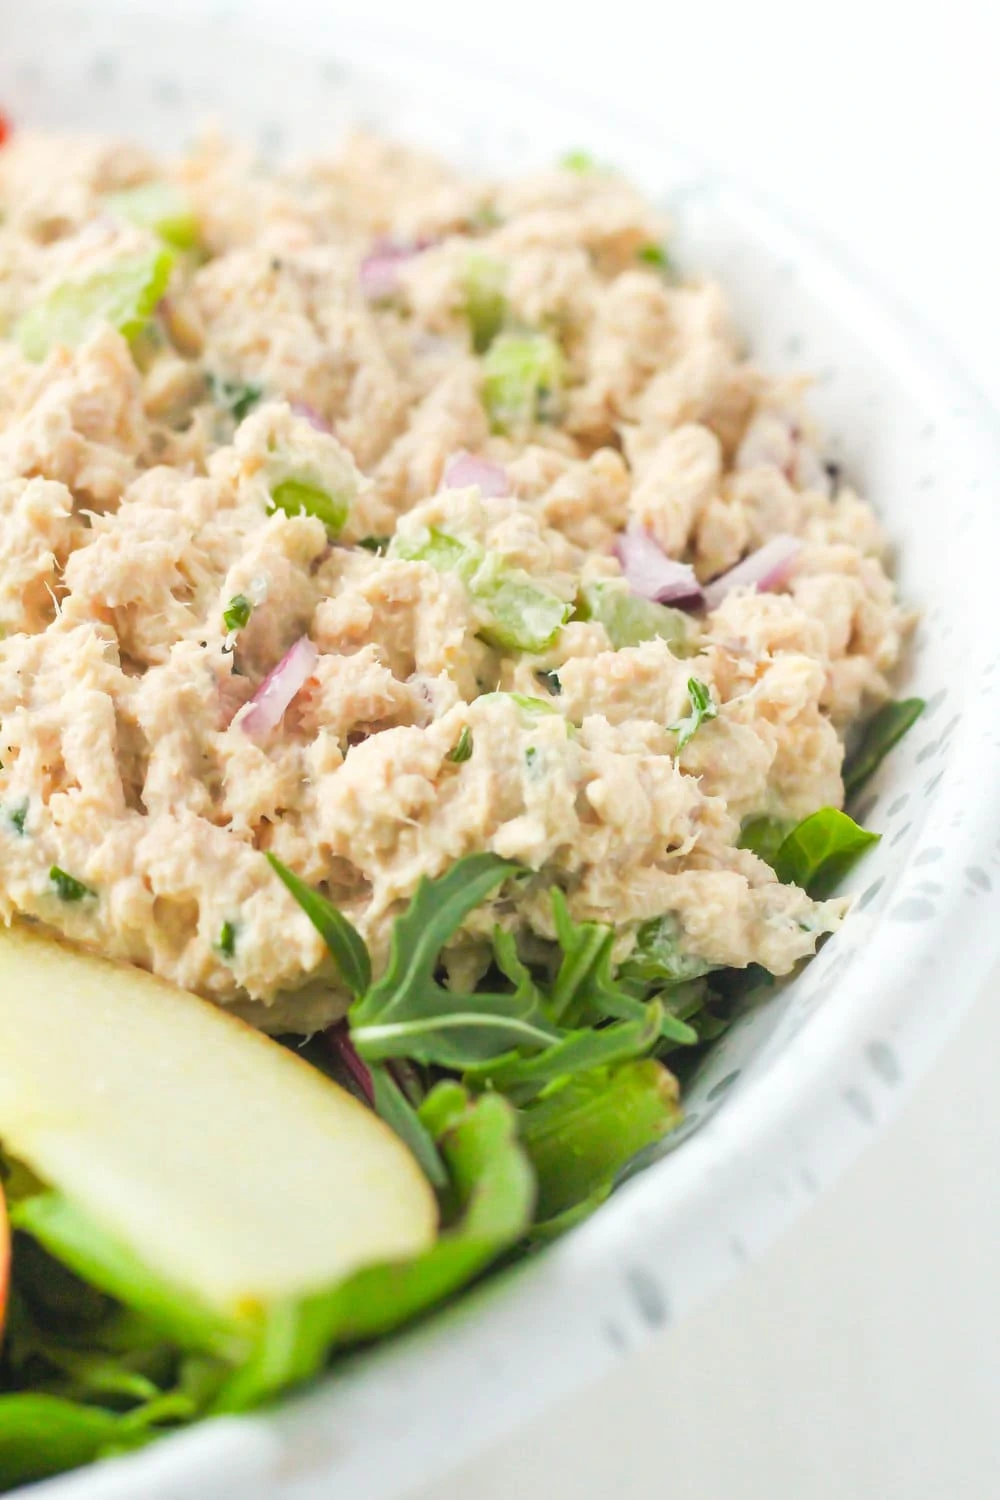 Easy Whole30 Salmon Salad